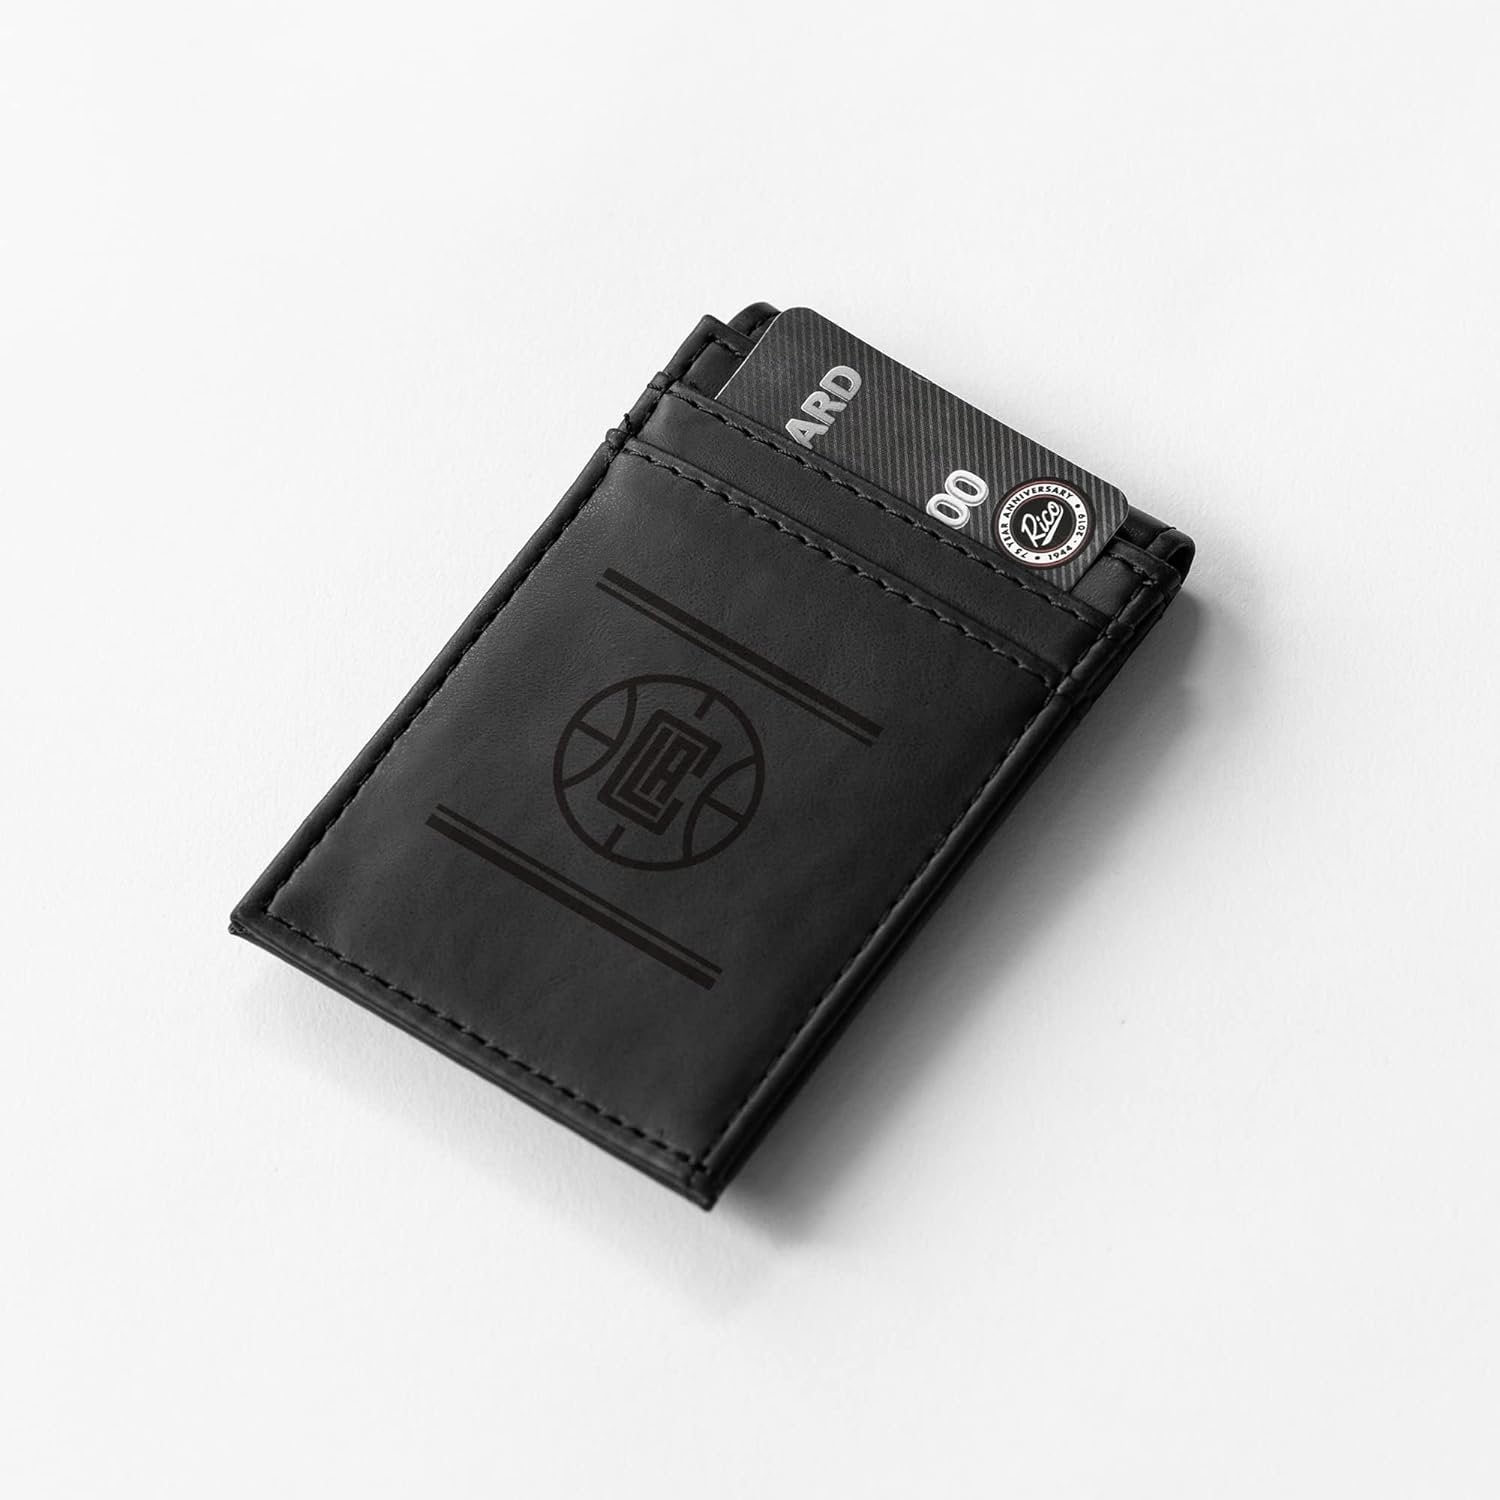 Los Angeles Clippers Premium Black Leather Wallet, Front Pocket Magnetic Money Clip, Laser Engraved, Vegan